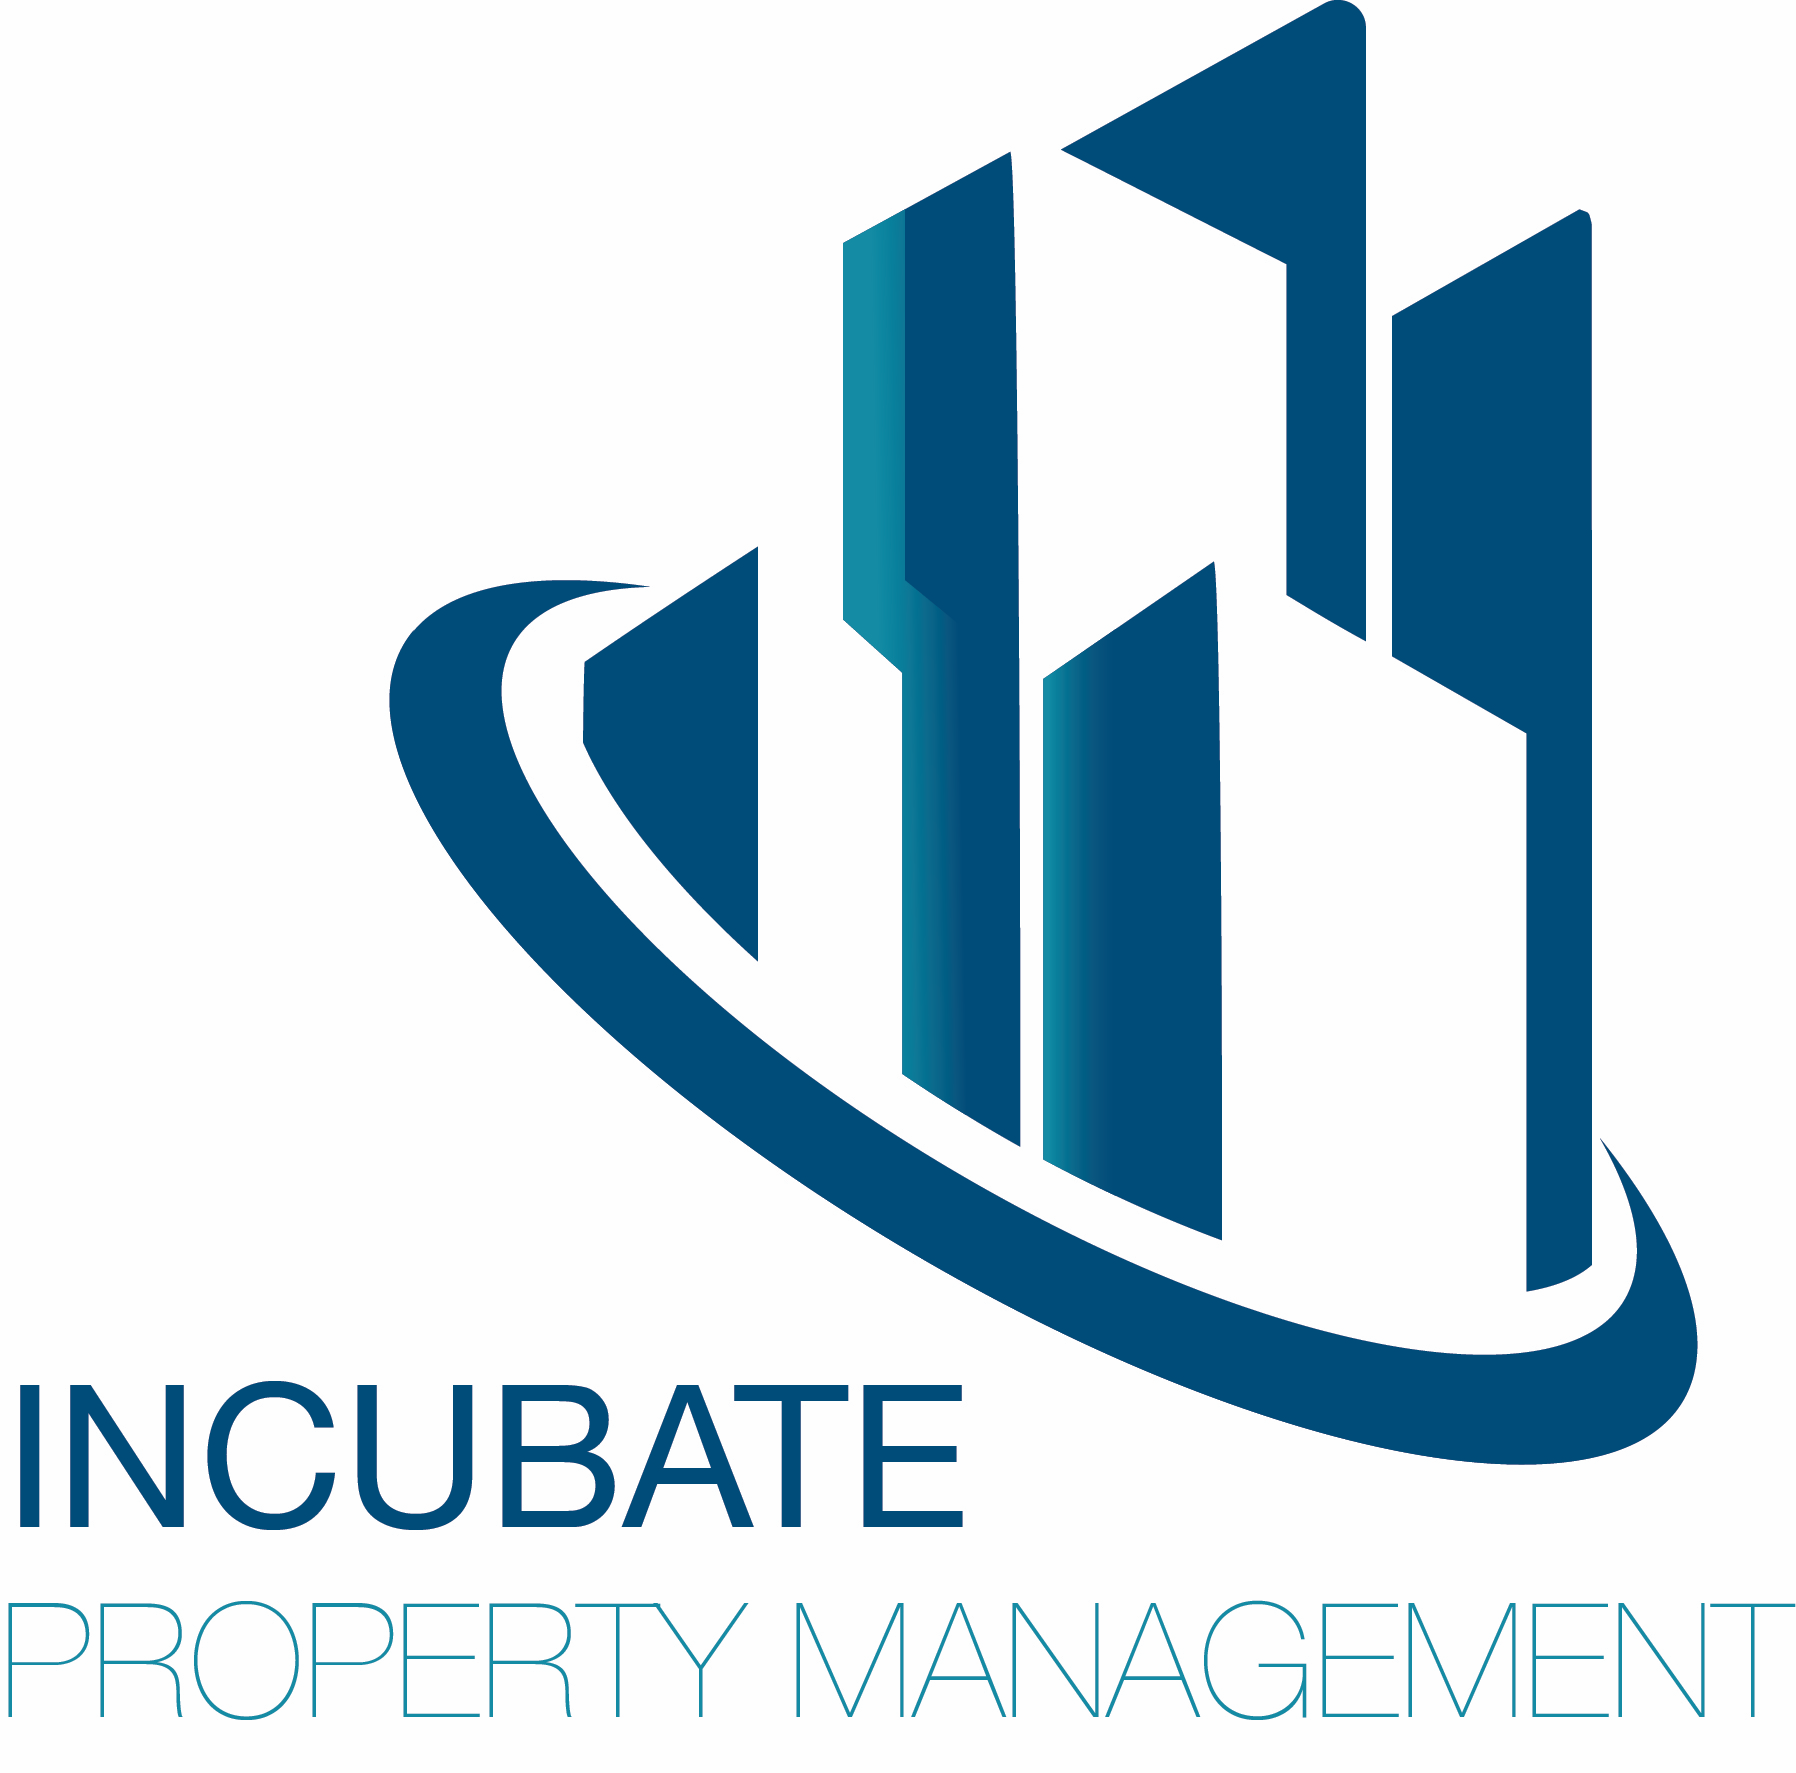 Incubate Property Management logo